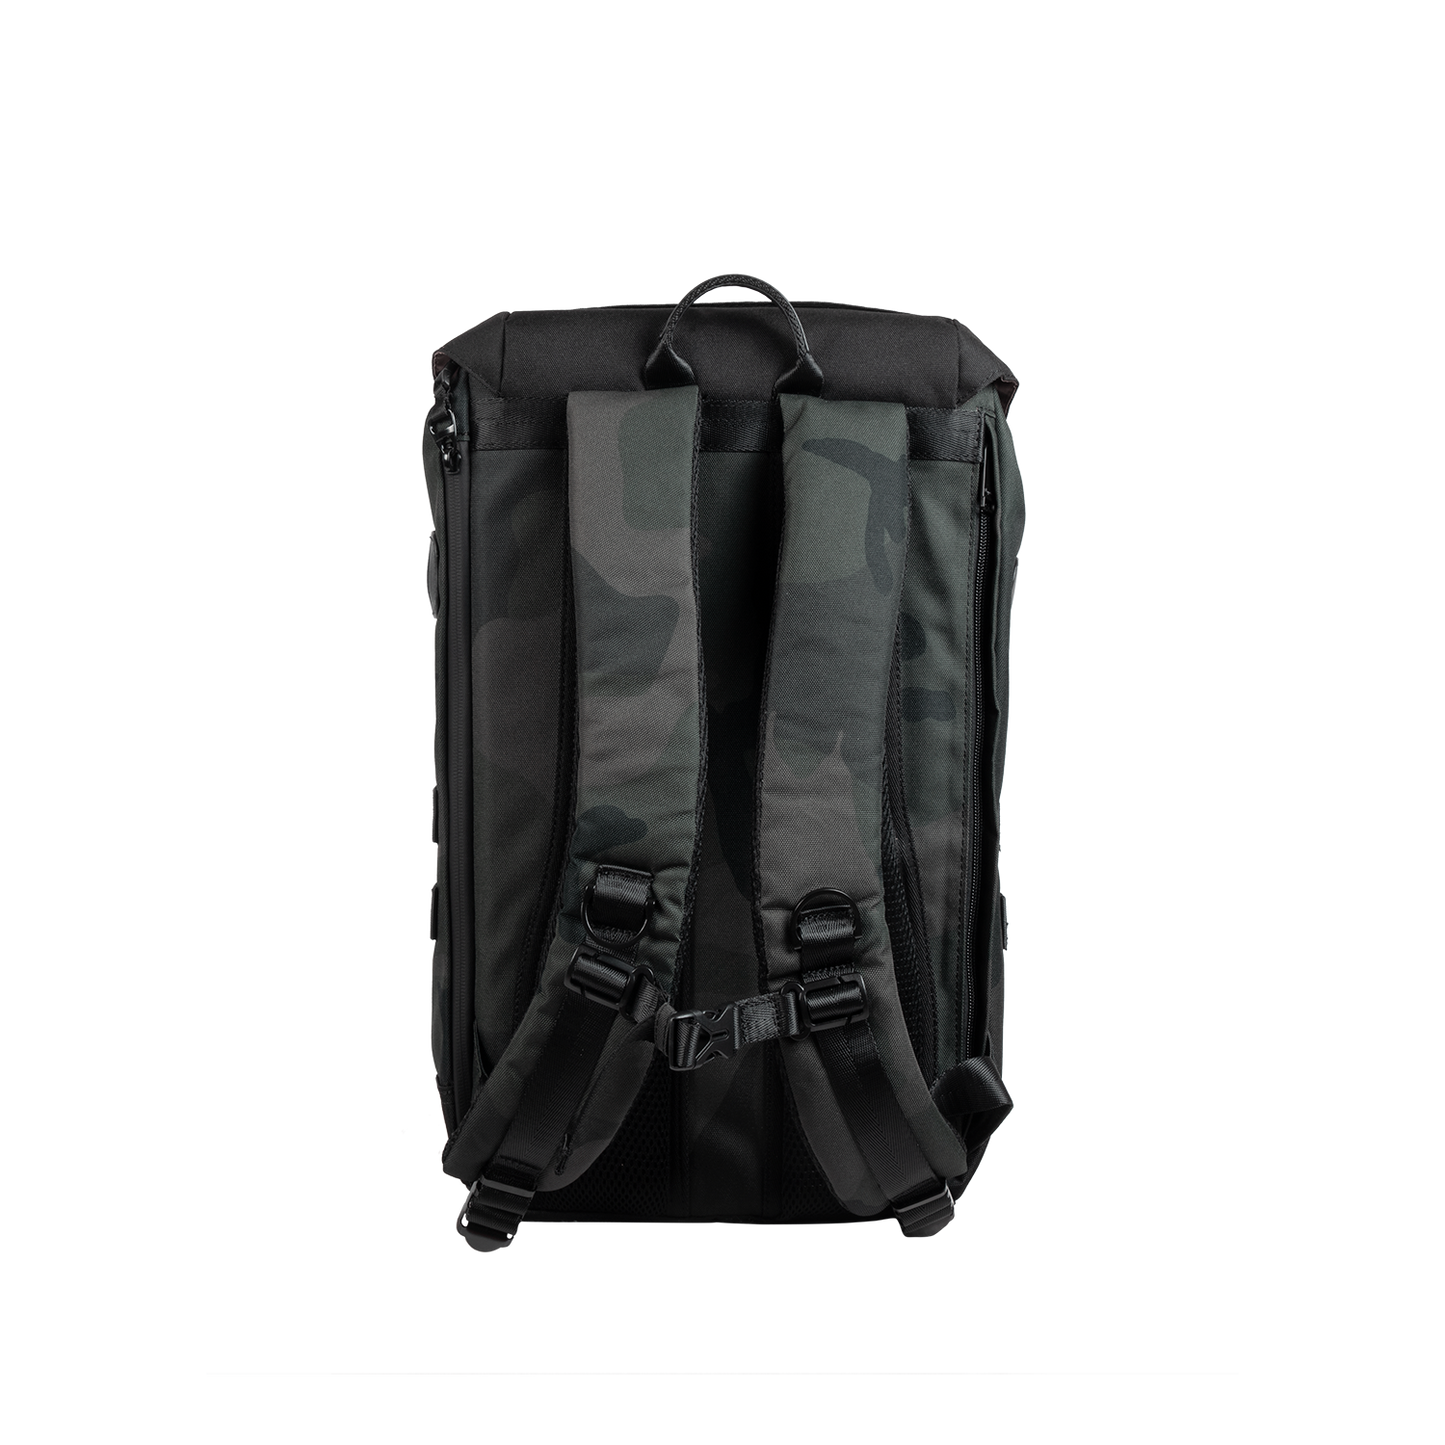 Colorado Small Camo Series Backpack